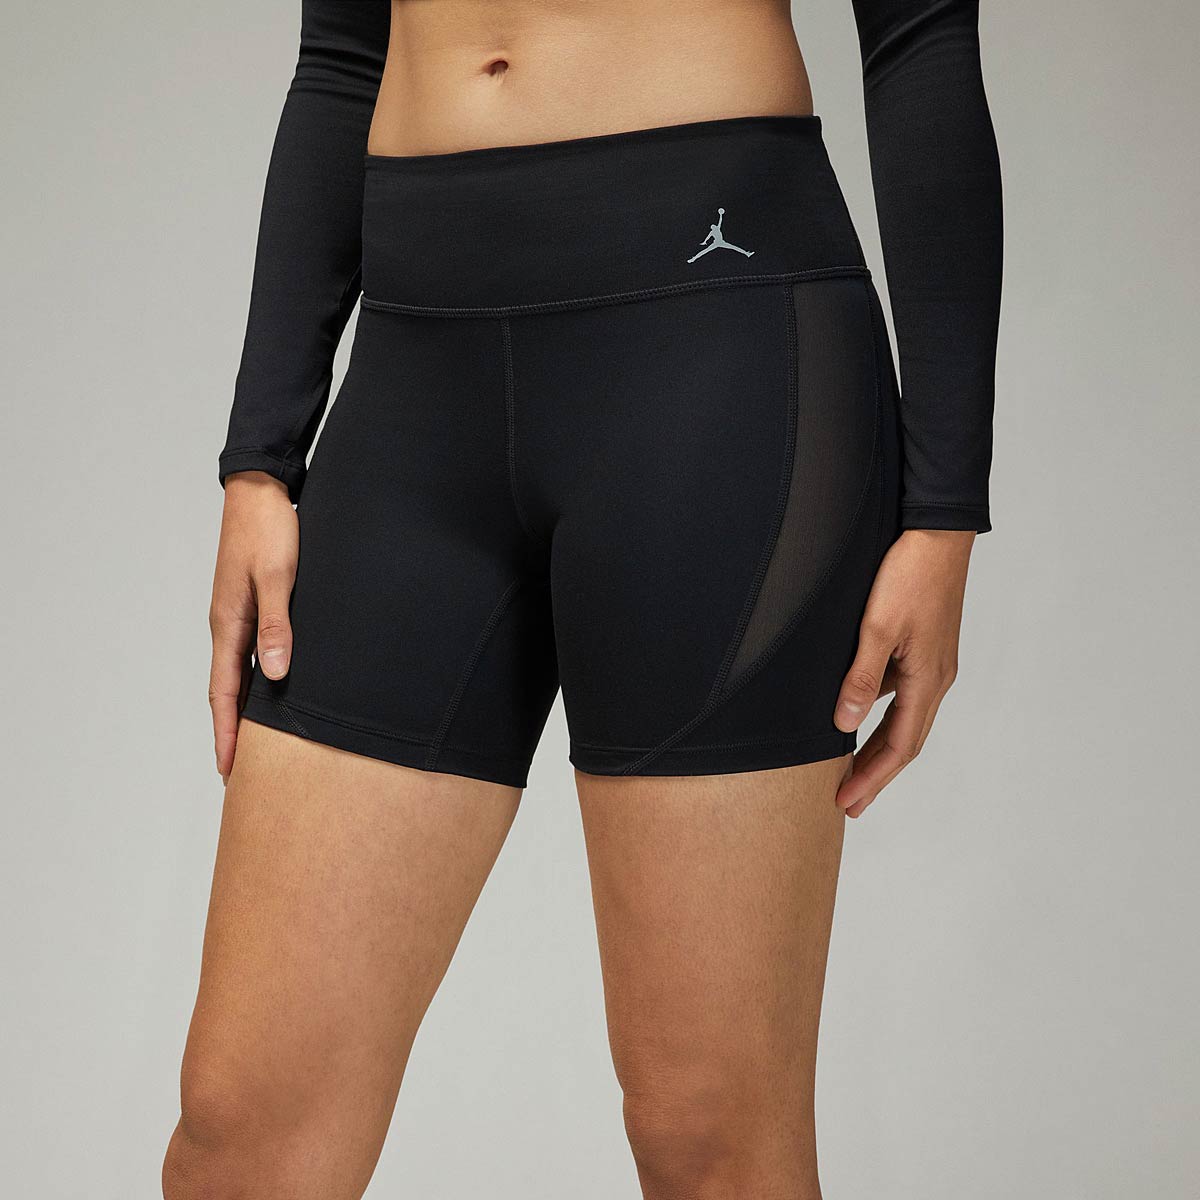 Jordan J Sport Leg Short Womens, Black/Black/Stealth